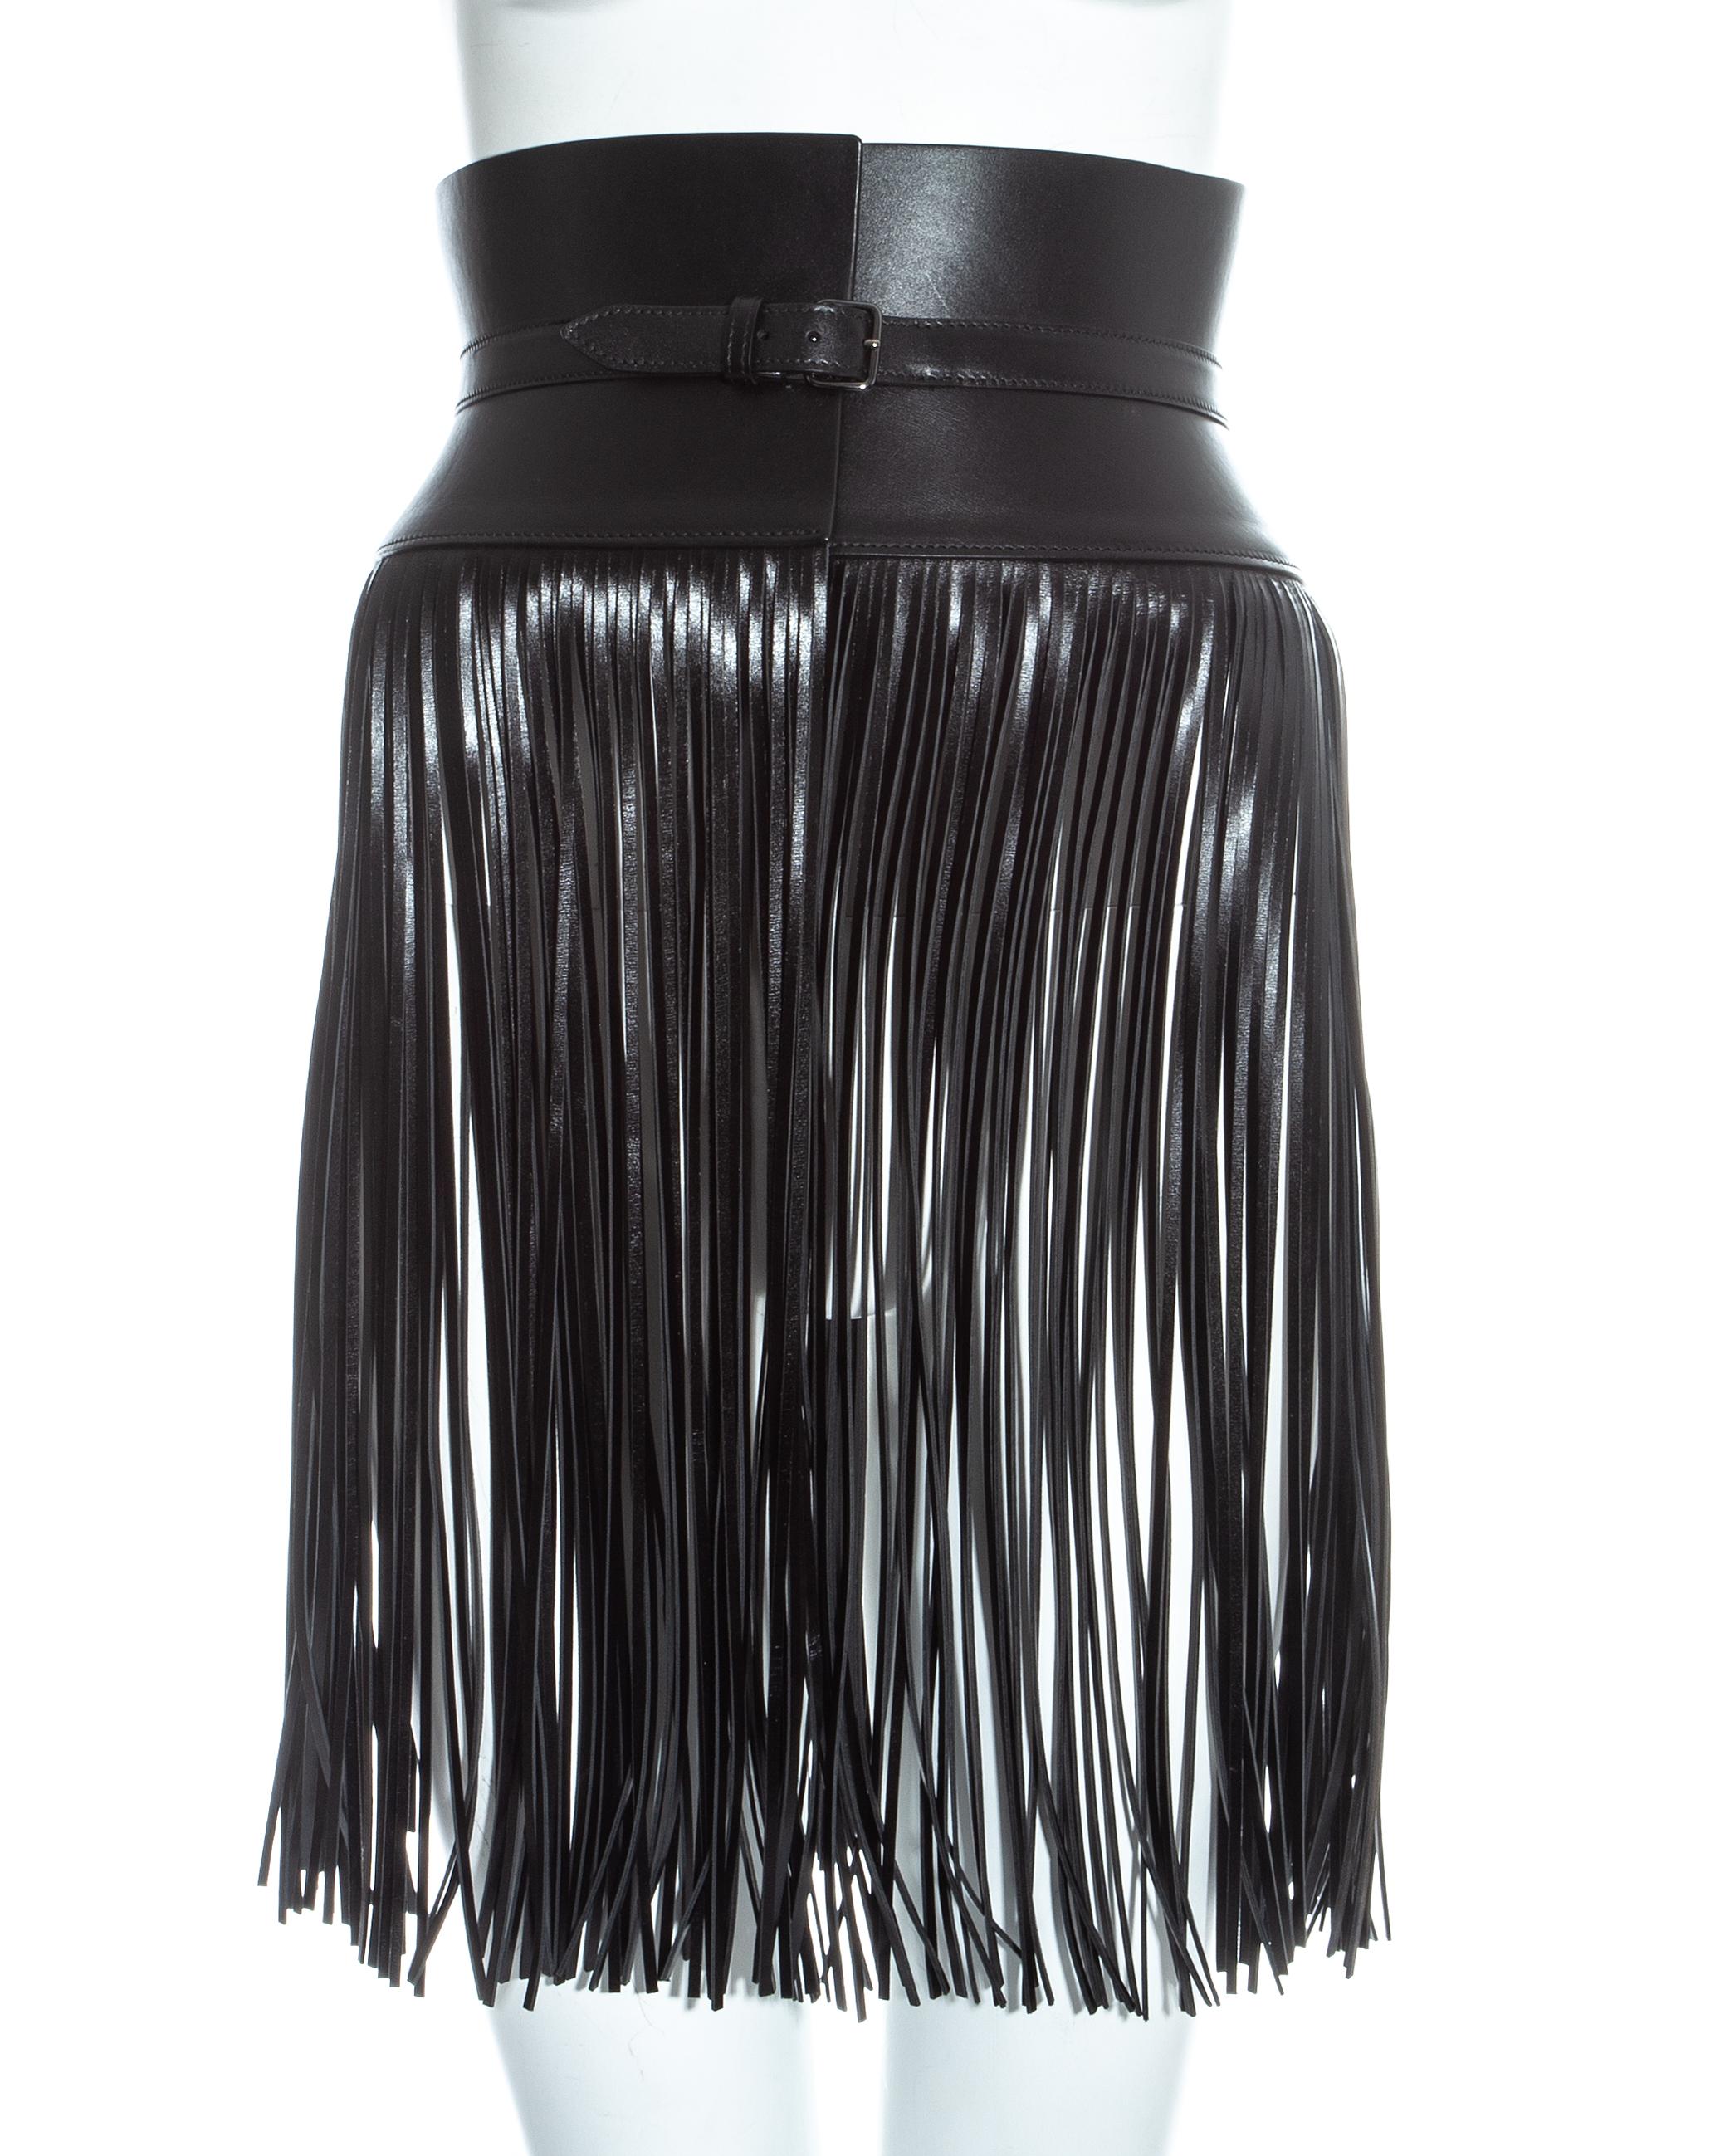 Azzedine Alaia black leather wide corset belt with laser cut fringed trim
